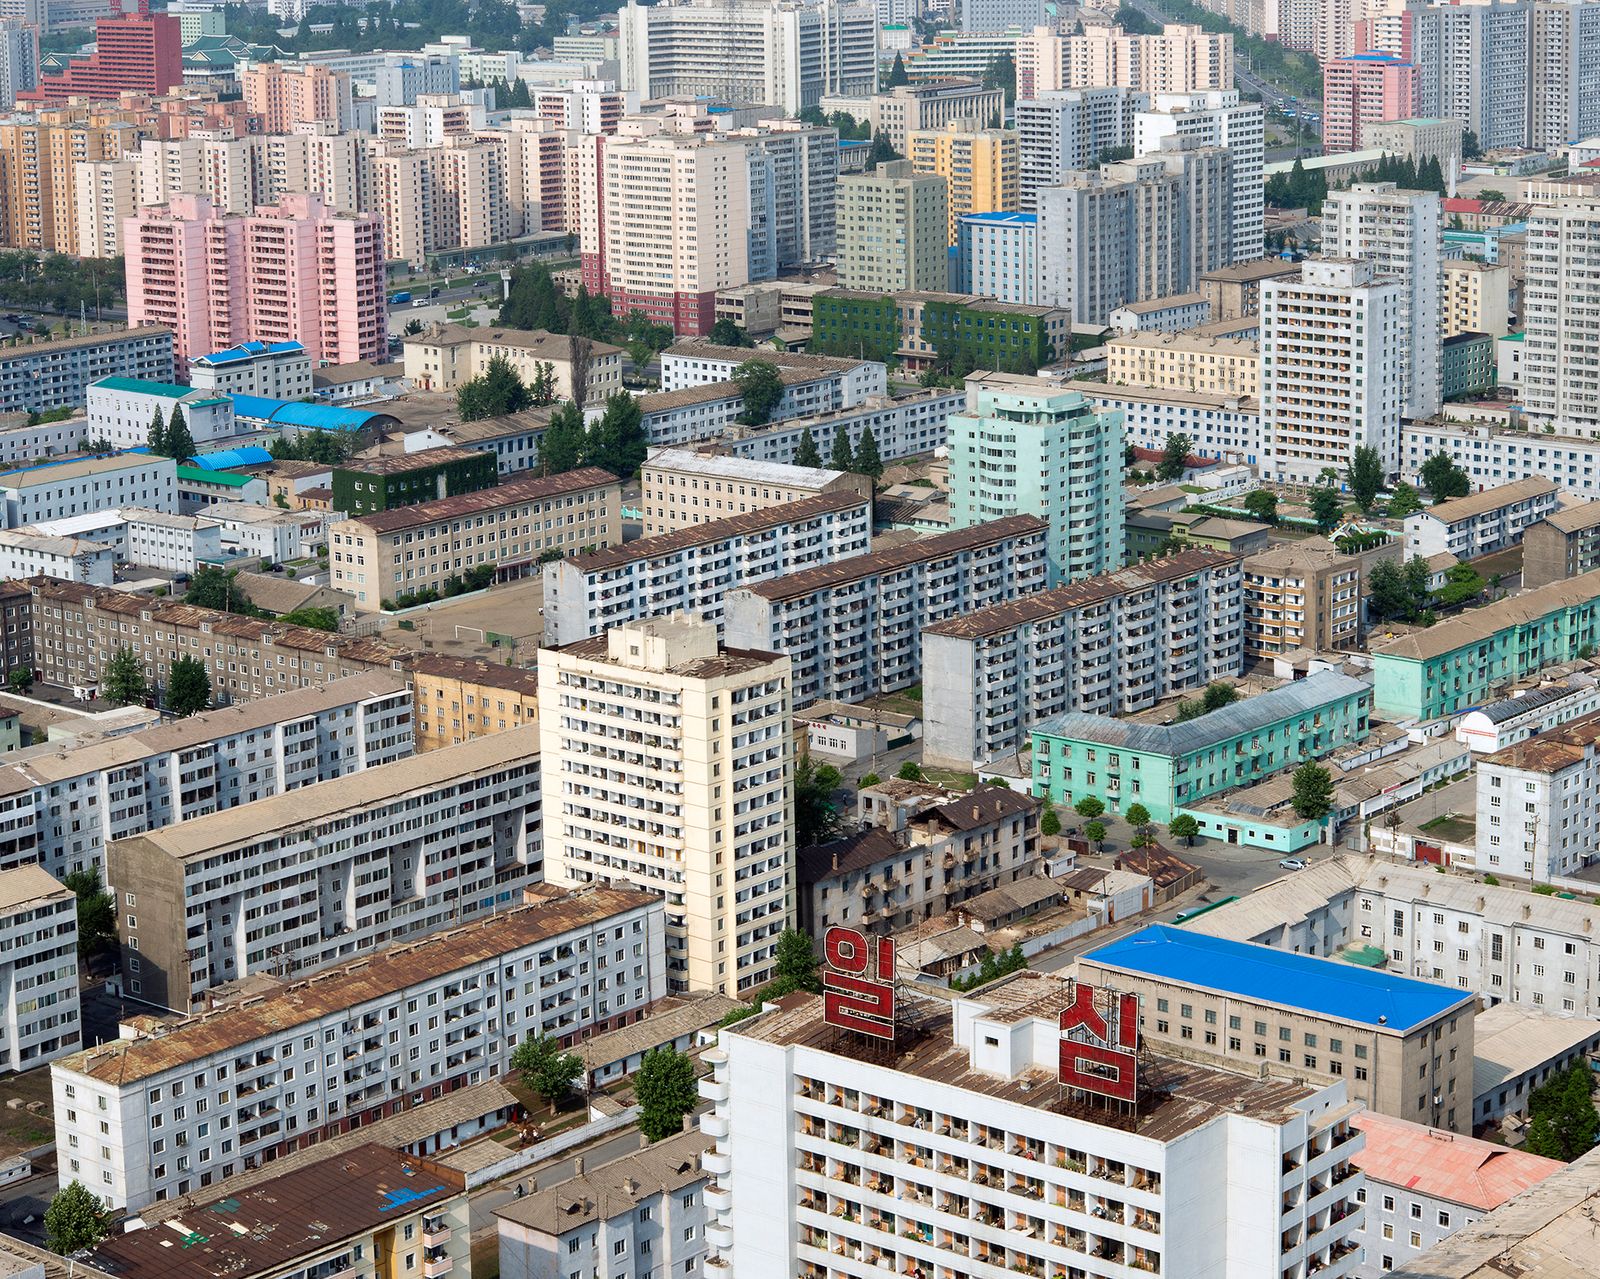 © Lee Grant - A view across Pyongyang, 2014